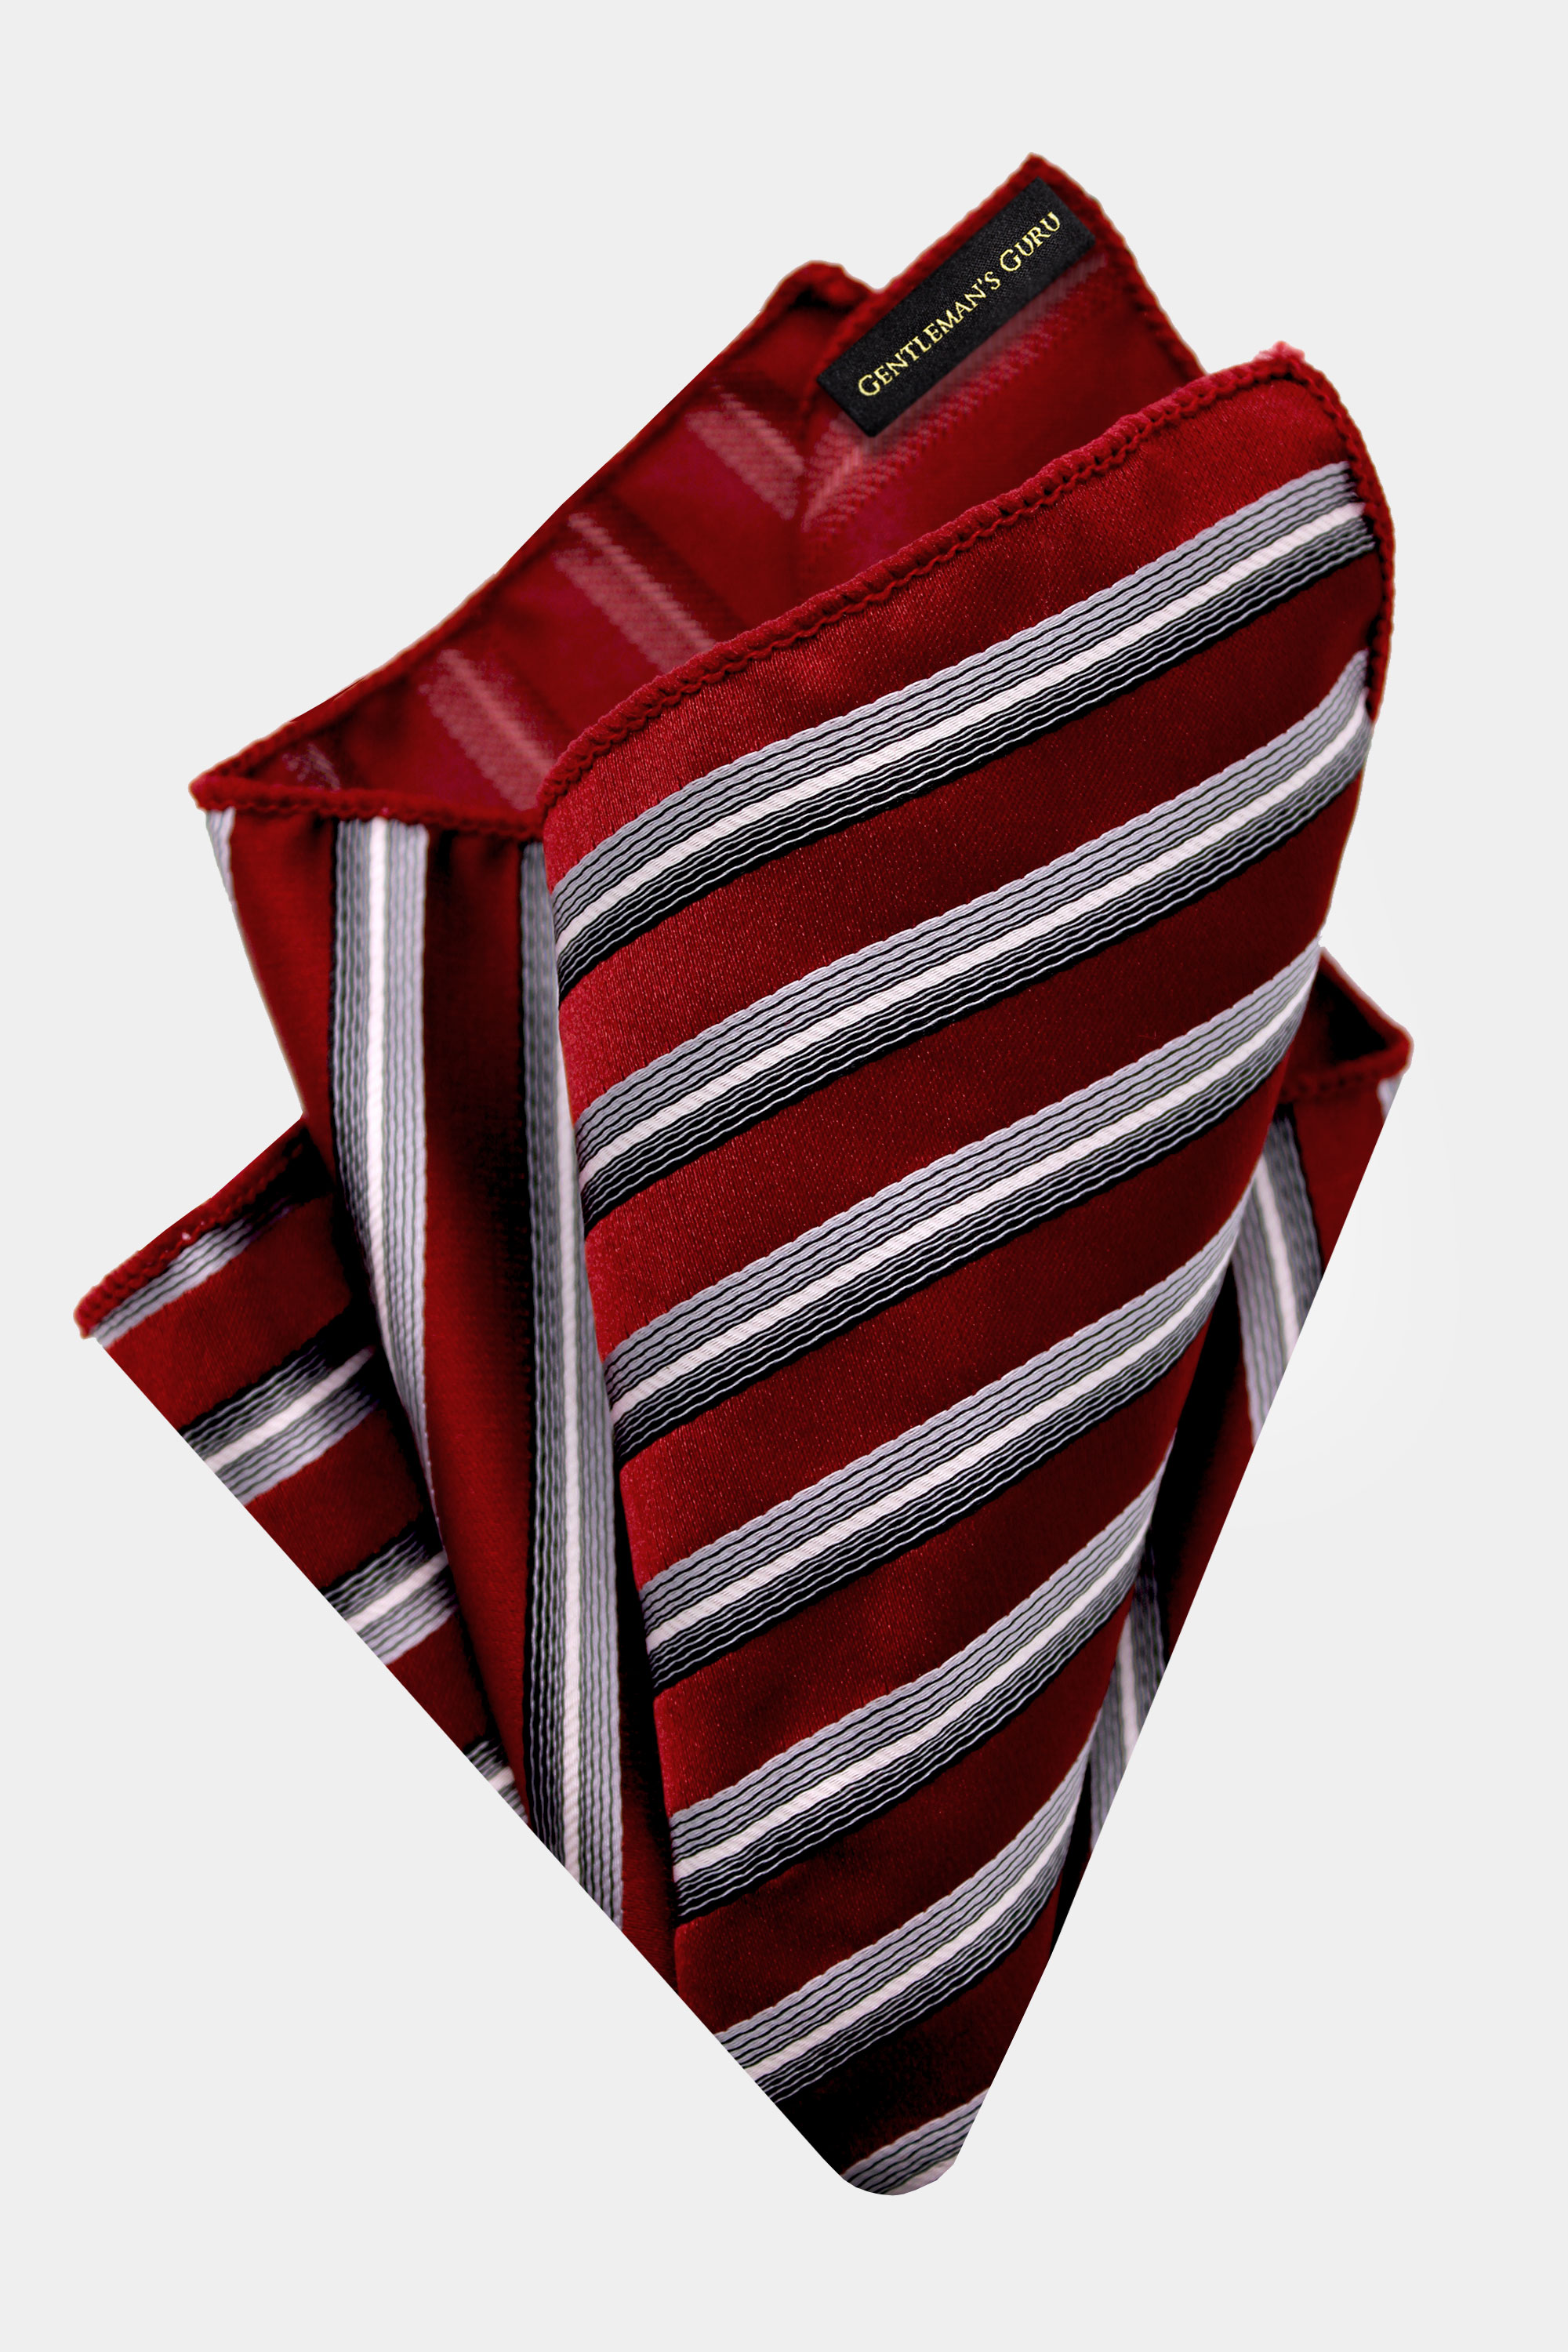 Burgundy-Striped-Pocket-Square-Handkerchief-from-Gentlemansguru.com